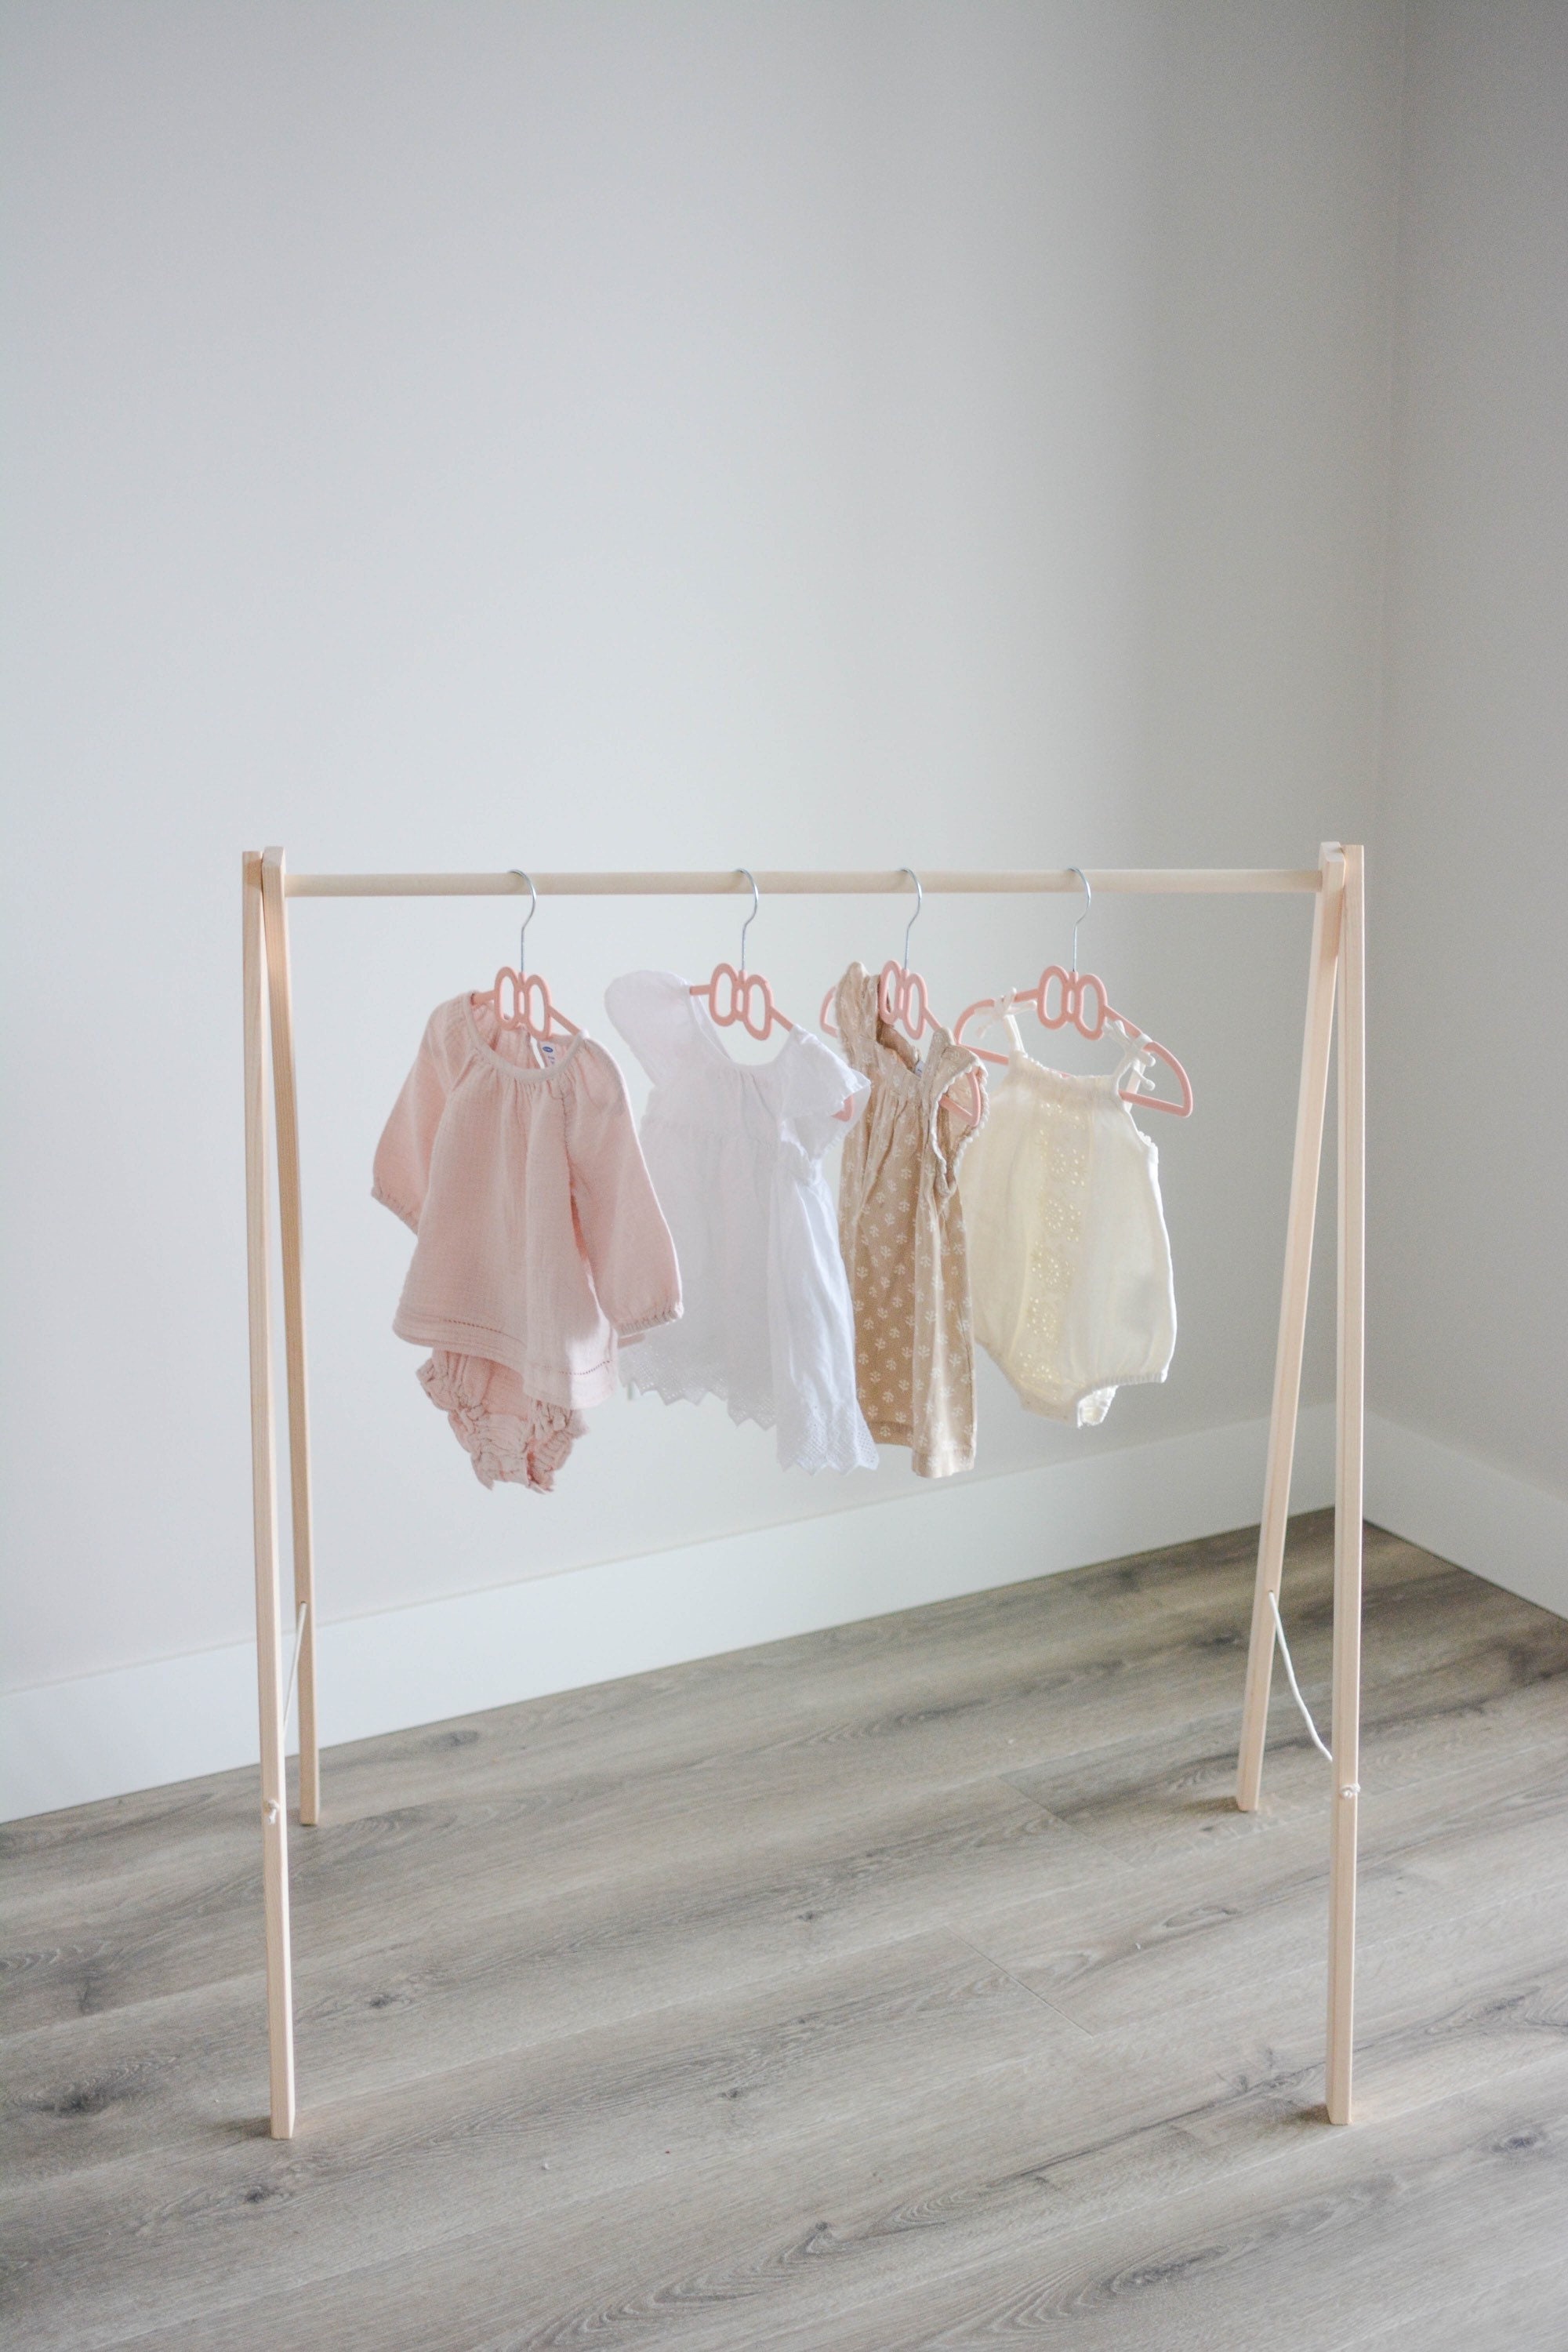 5 Pieces Children Clothes Hanger Creative Cute Wooden Hook Hanger Hanging  Rack for Kids Present Infant Newborn Baby Gifts 